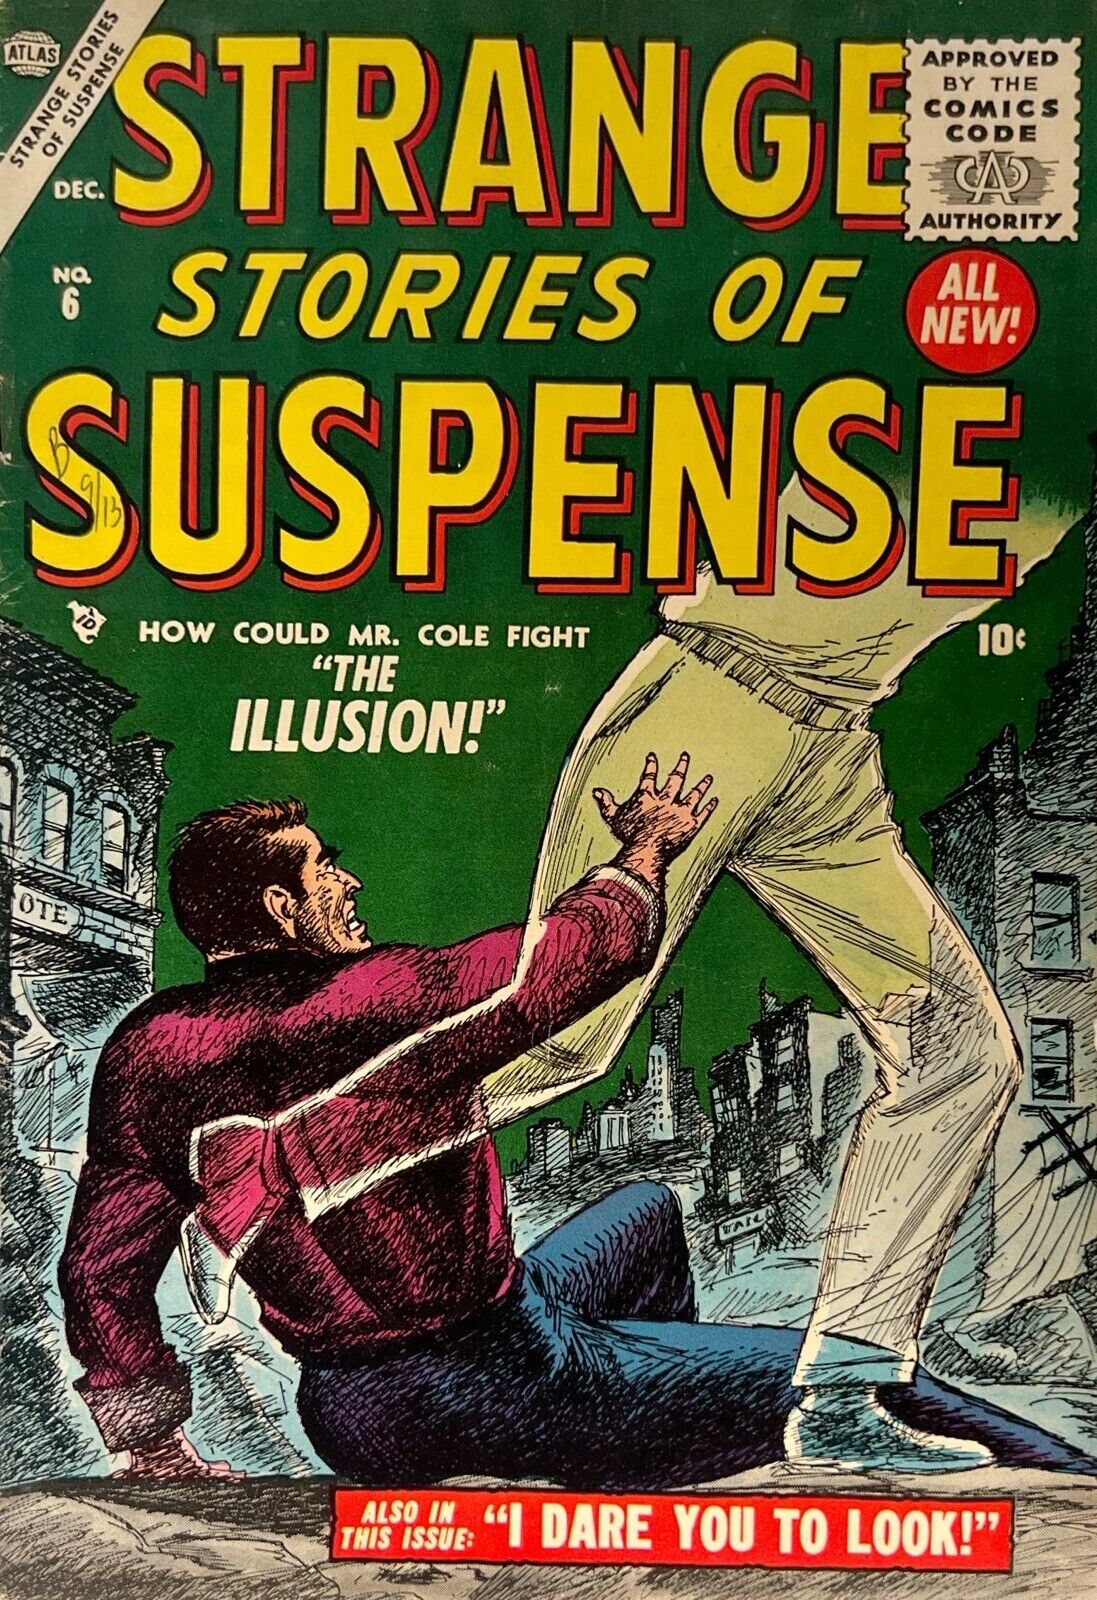 1955 STRANGE STORIES OF SUSPENSE COMIC..VOL.1..NO.6.ATLAS..GOLDEN HORROR/SCI-FI